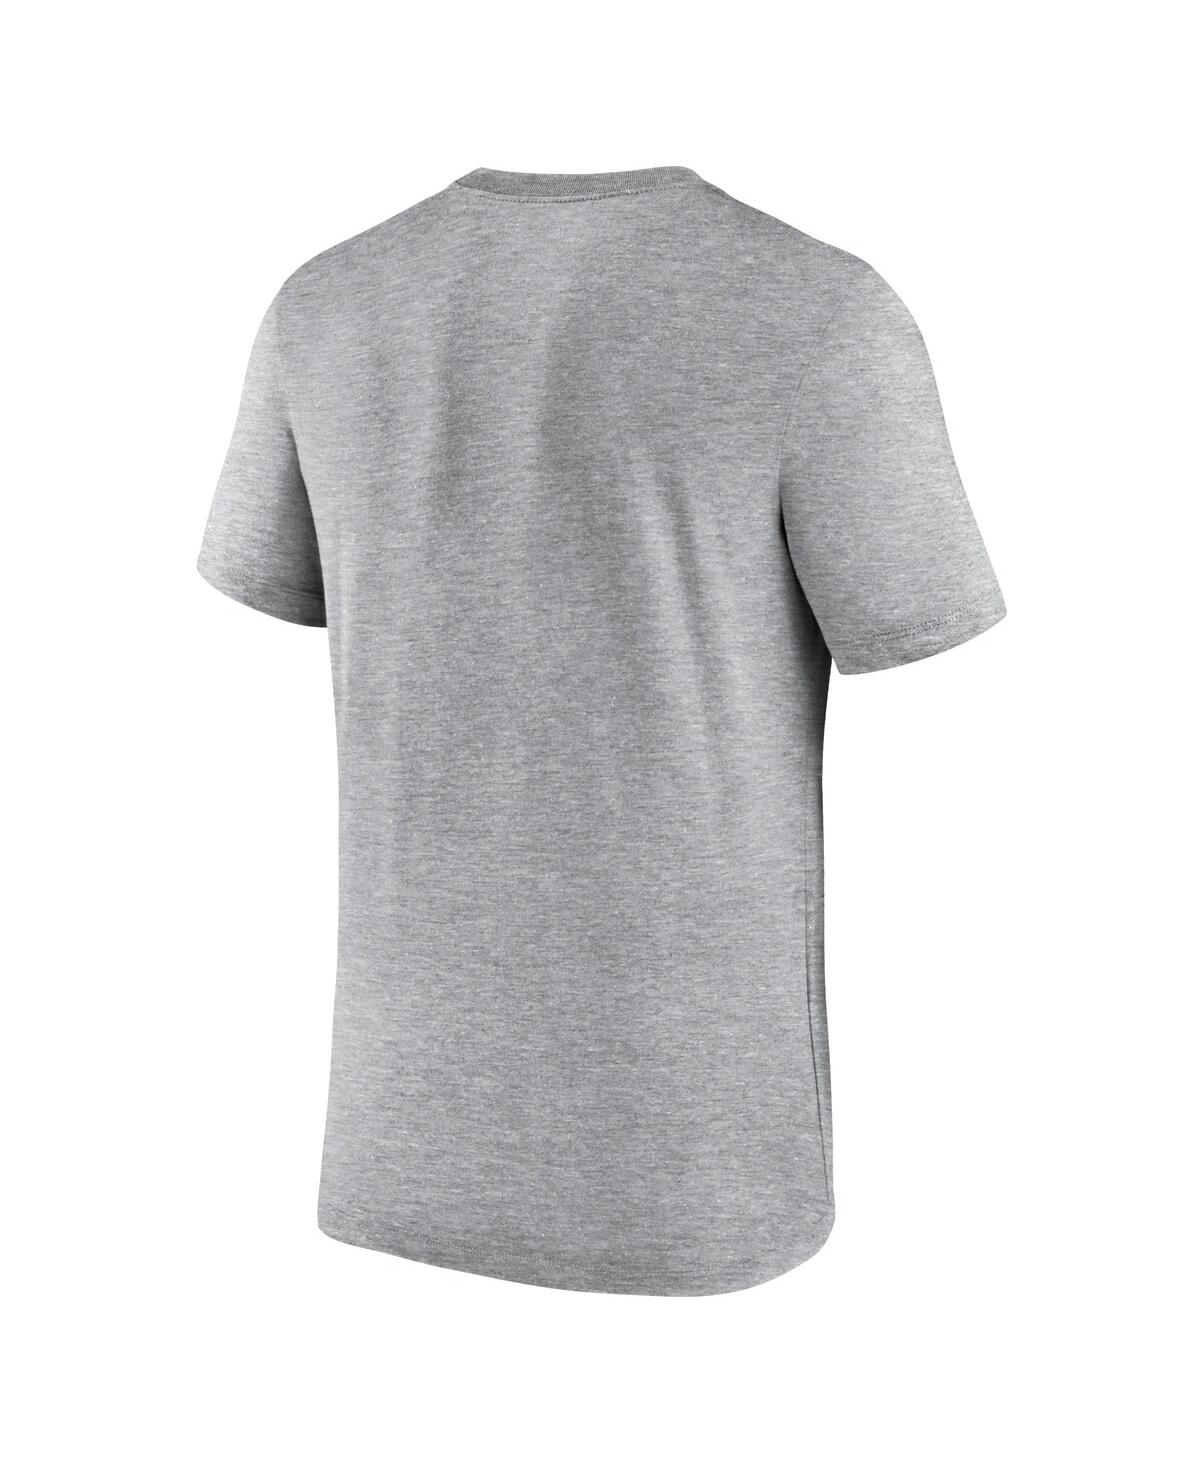 Shop Nike Men's  Gray Paris Saint-germain Just Do It T-shirt